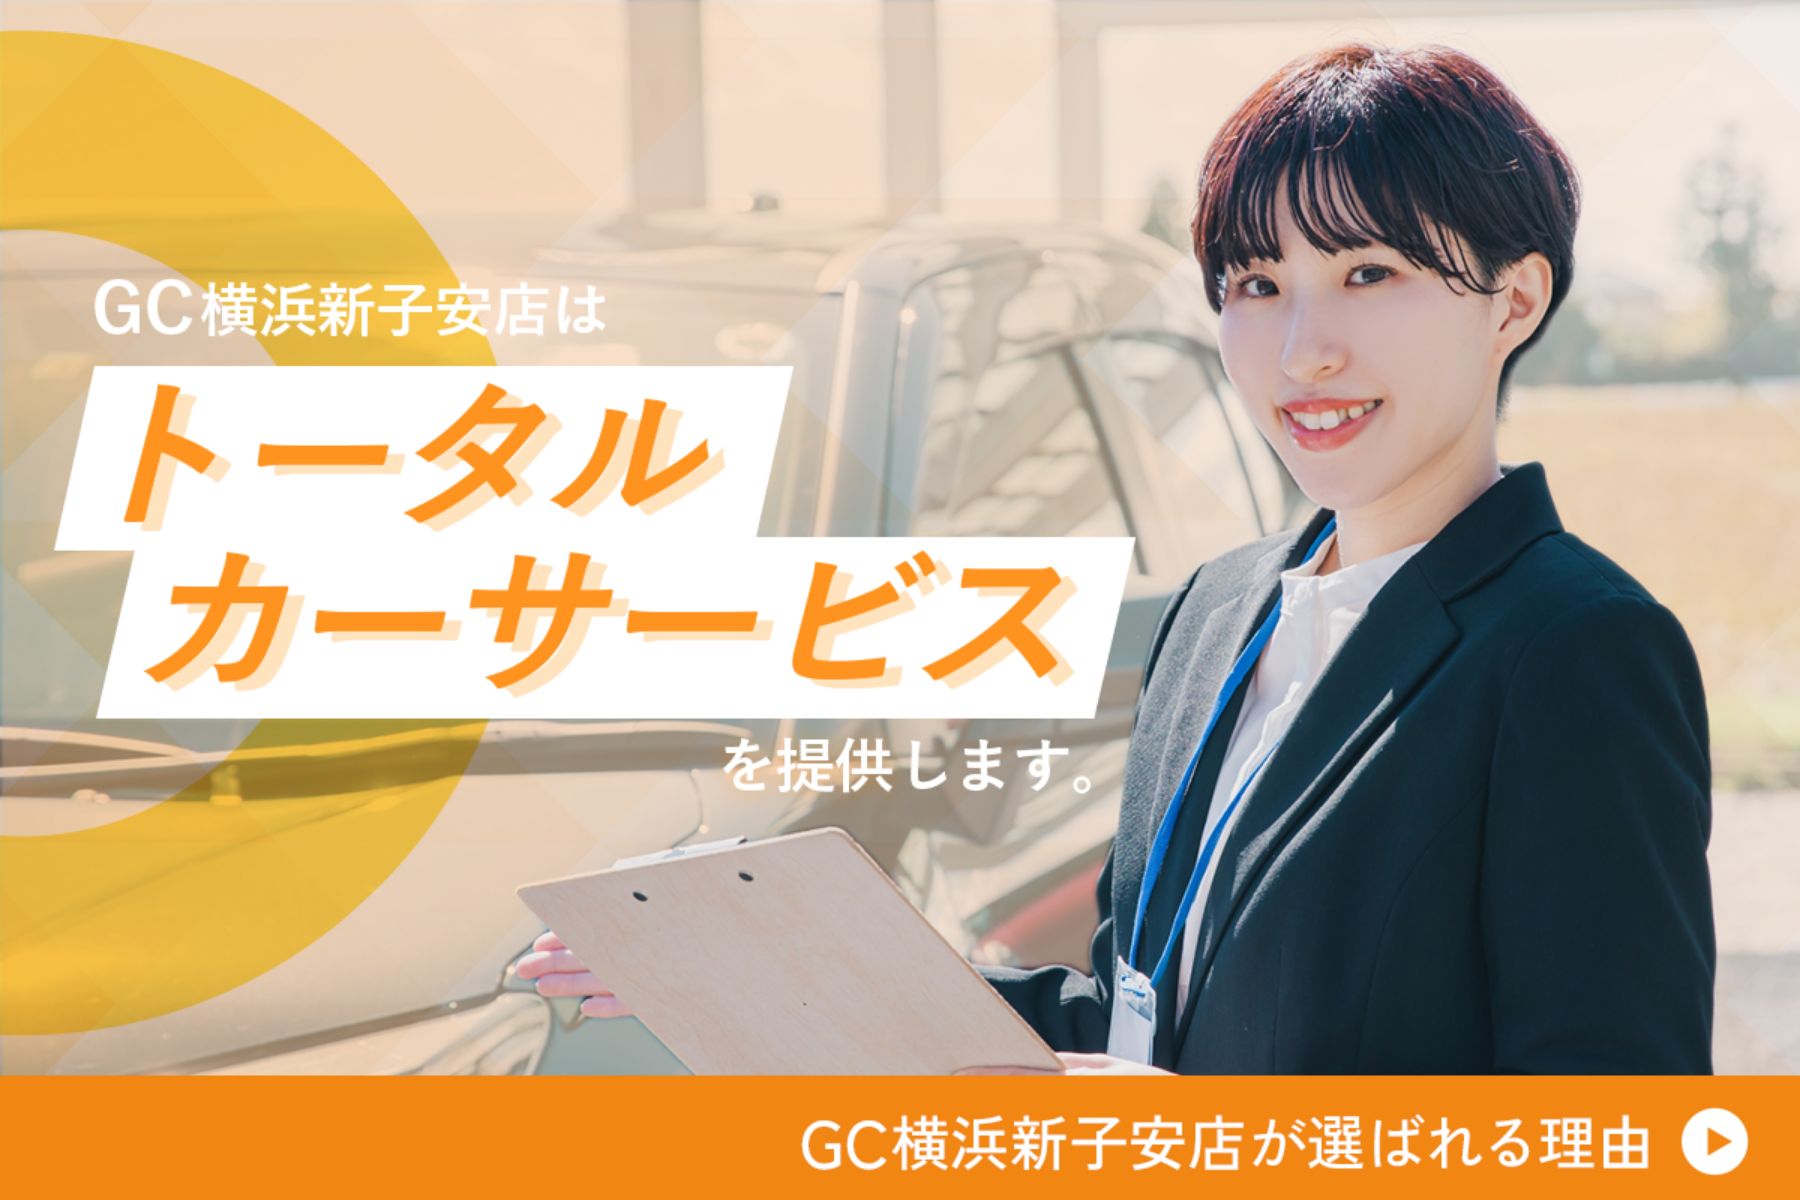 GC横浜新子安店はトータルカーサービスを提供します。 GC横浜新子安店が選ばれる理由